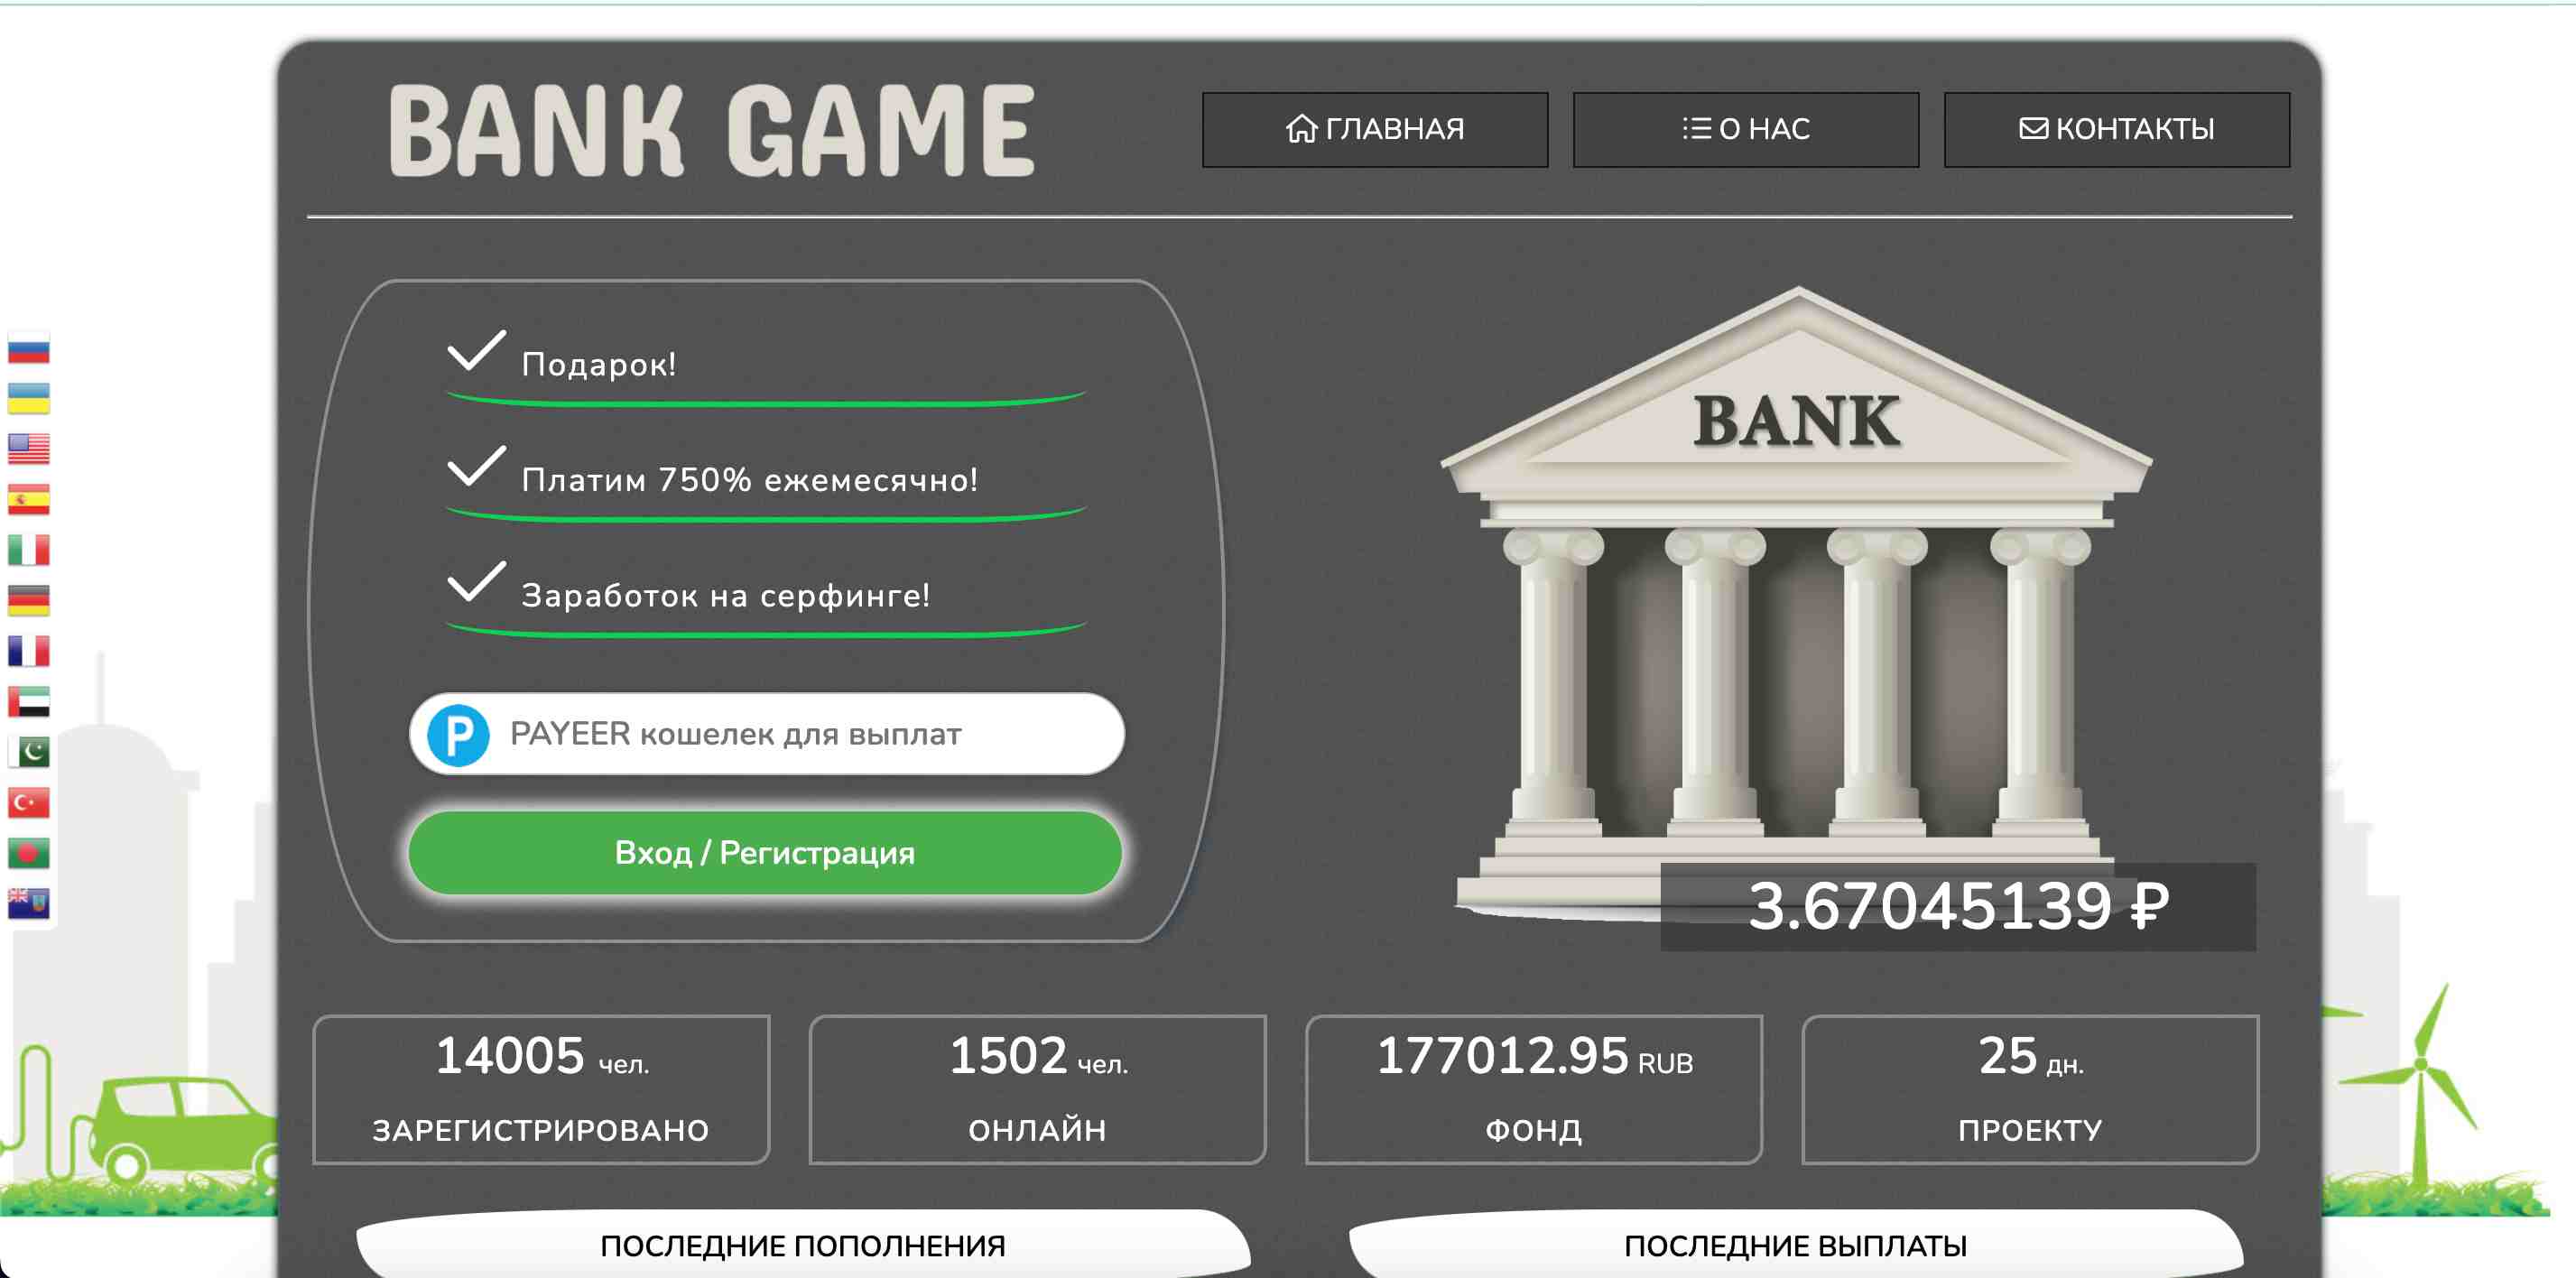 Bank Game